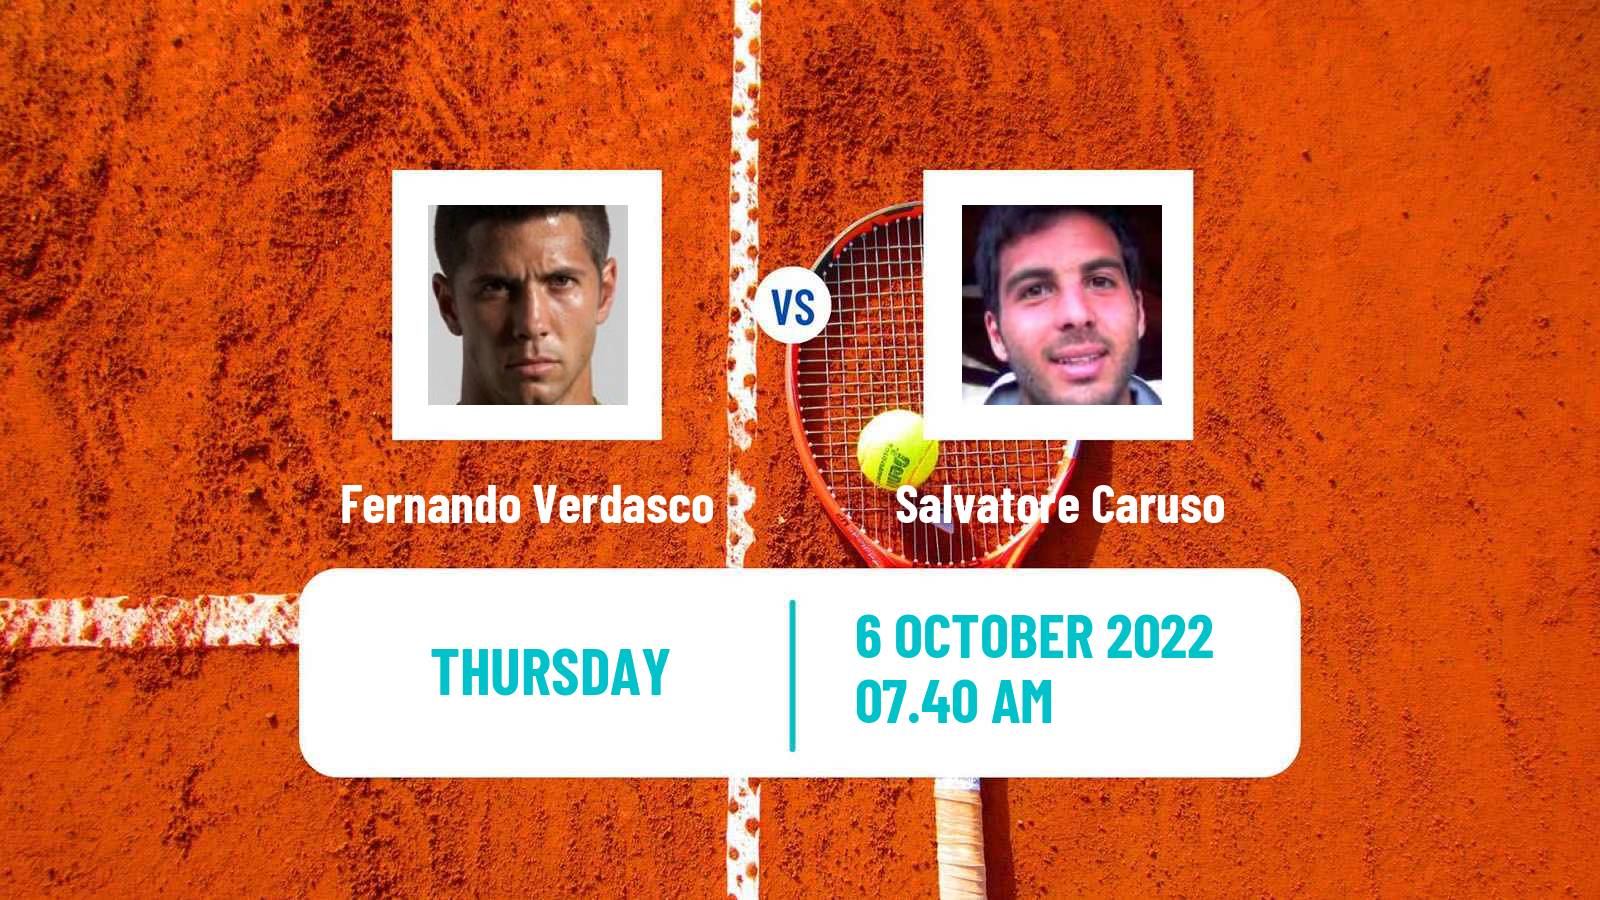 Tennis ATP Challenger Fernando Verdasco - Salvatore Caruso